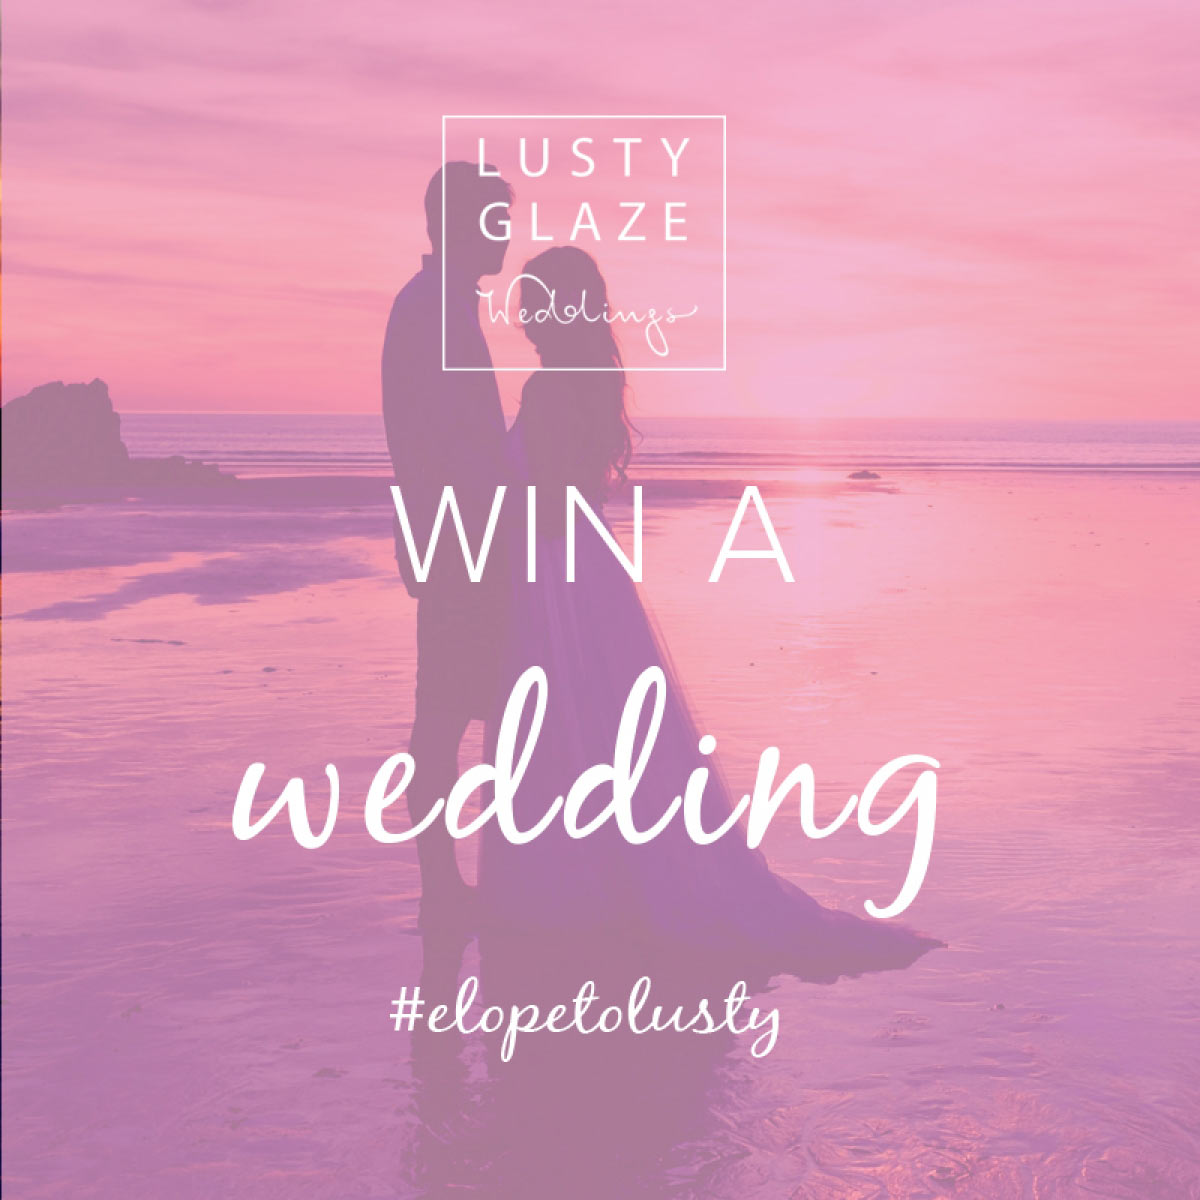 Win your wedding at Lusty Glaze!